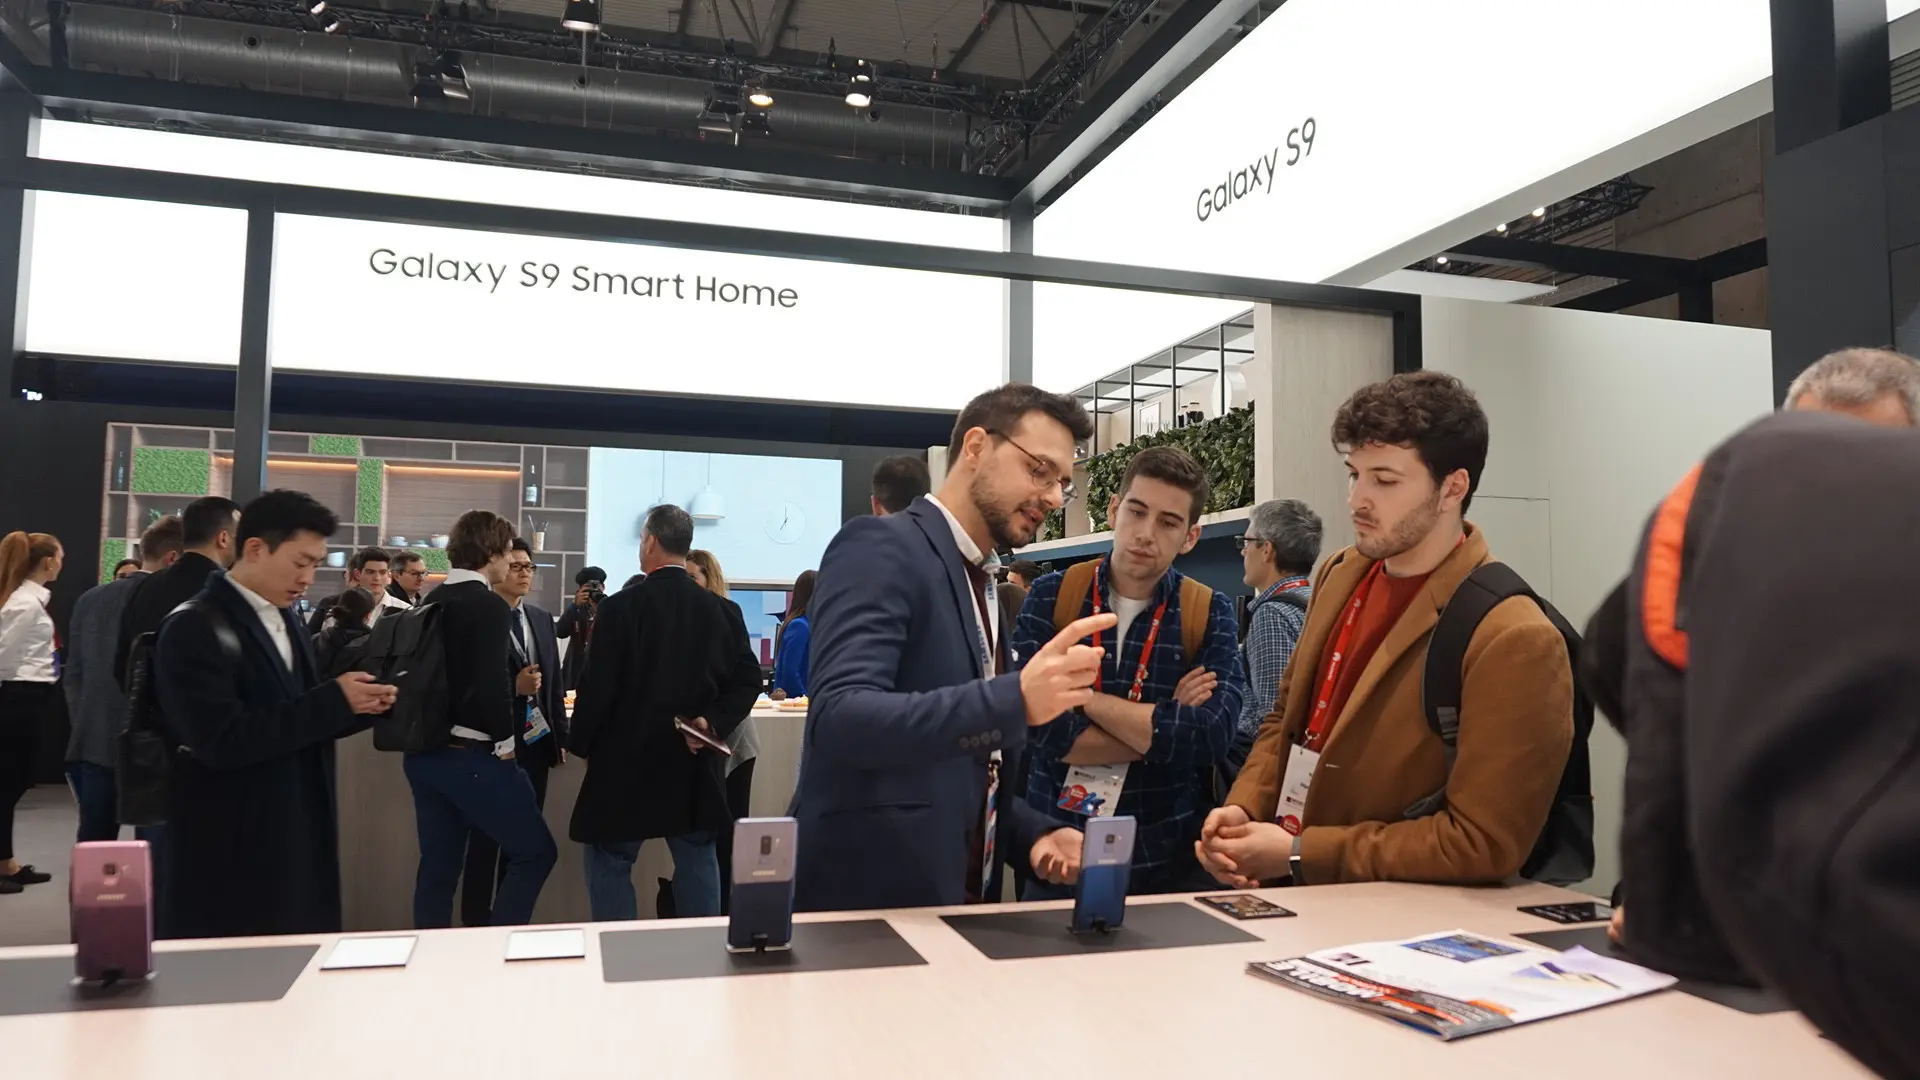 Antusiasme pengunjung di booth Samsung di gelaran Mobile World Congress 2018 (Liputan6.com/ Agustin Setyo W)